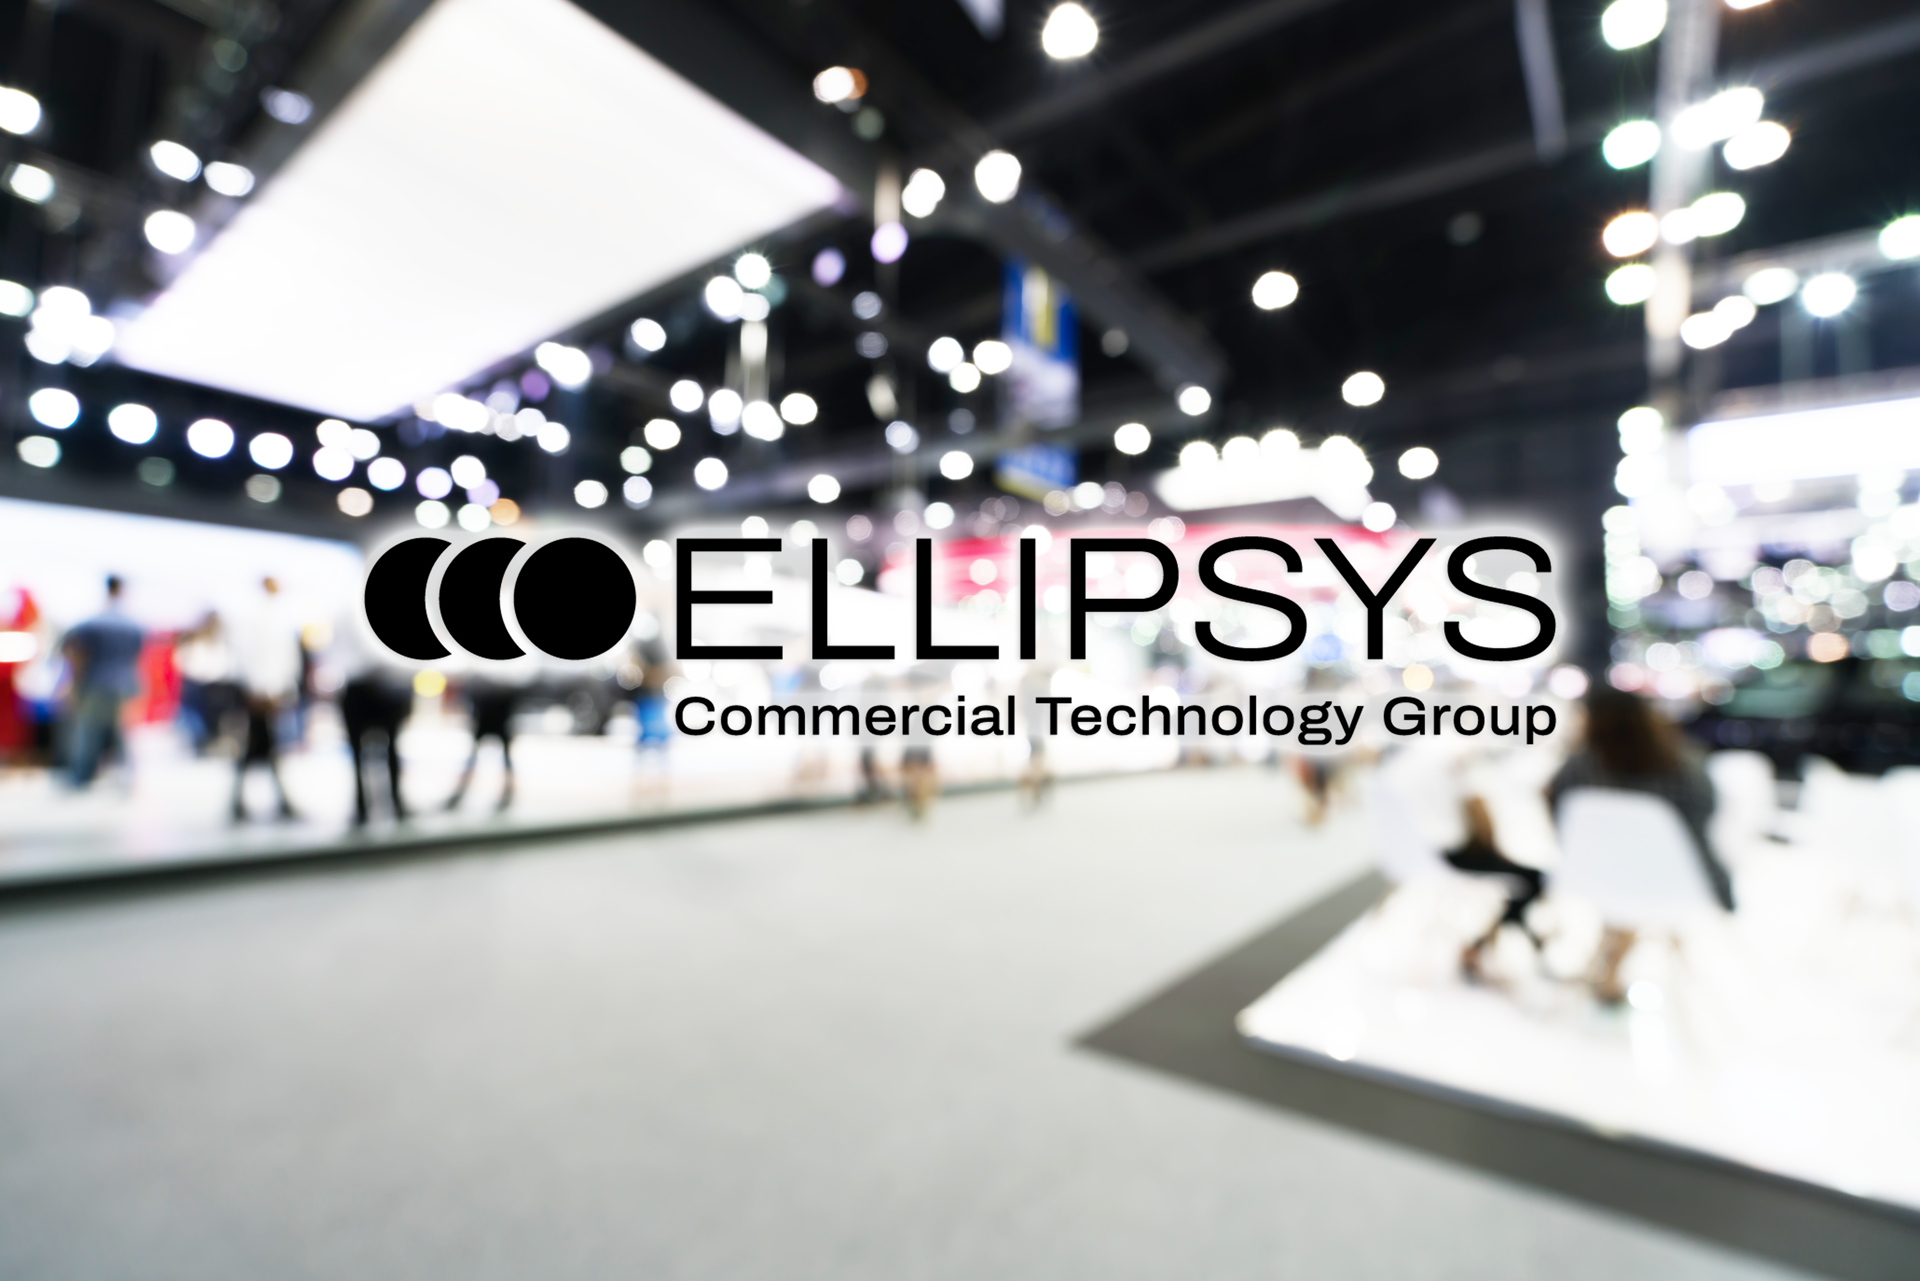 Ellipsys Commercial Technology Group impresses at InfoComm 2023